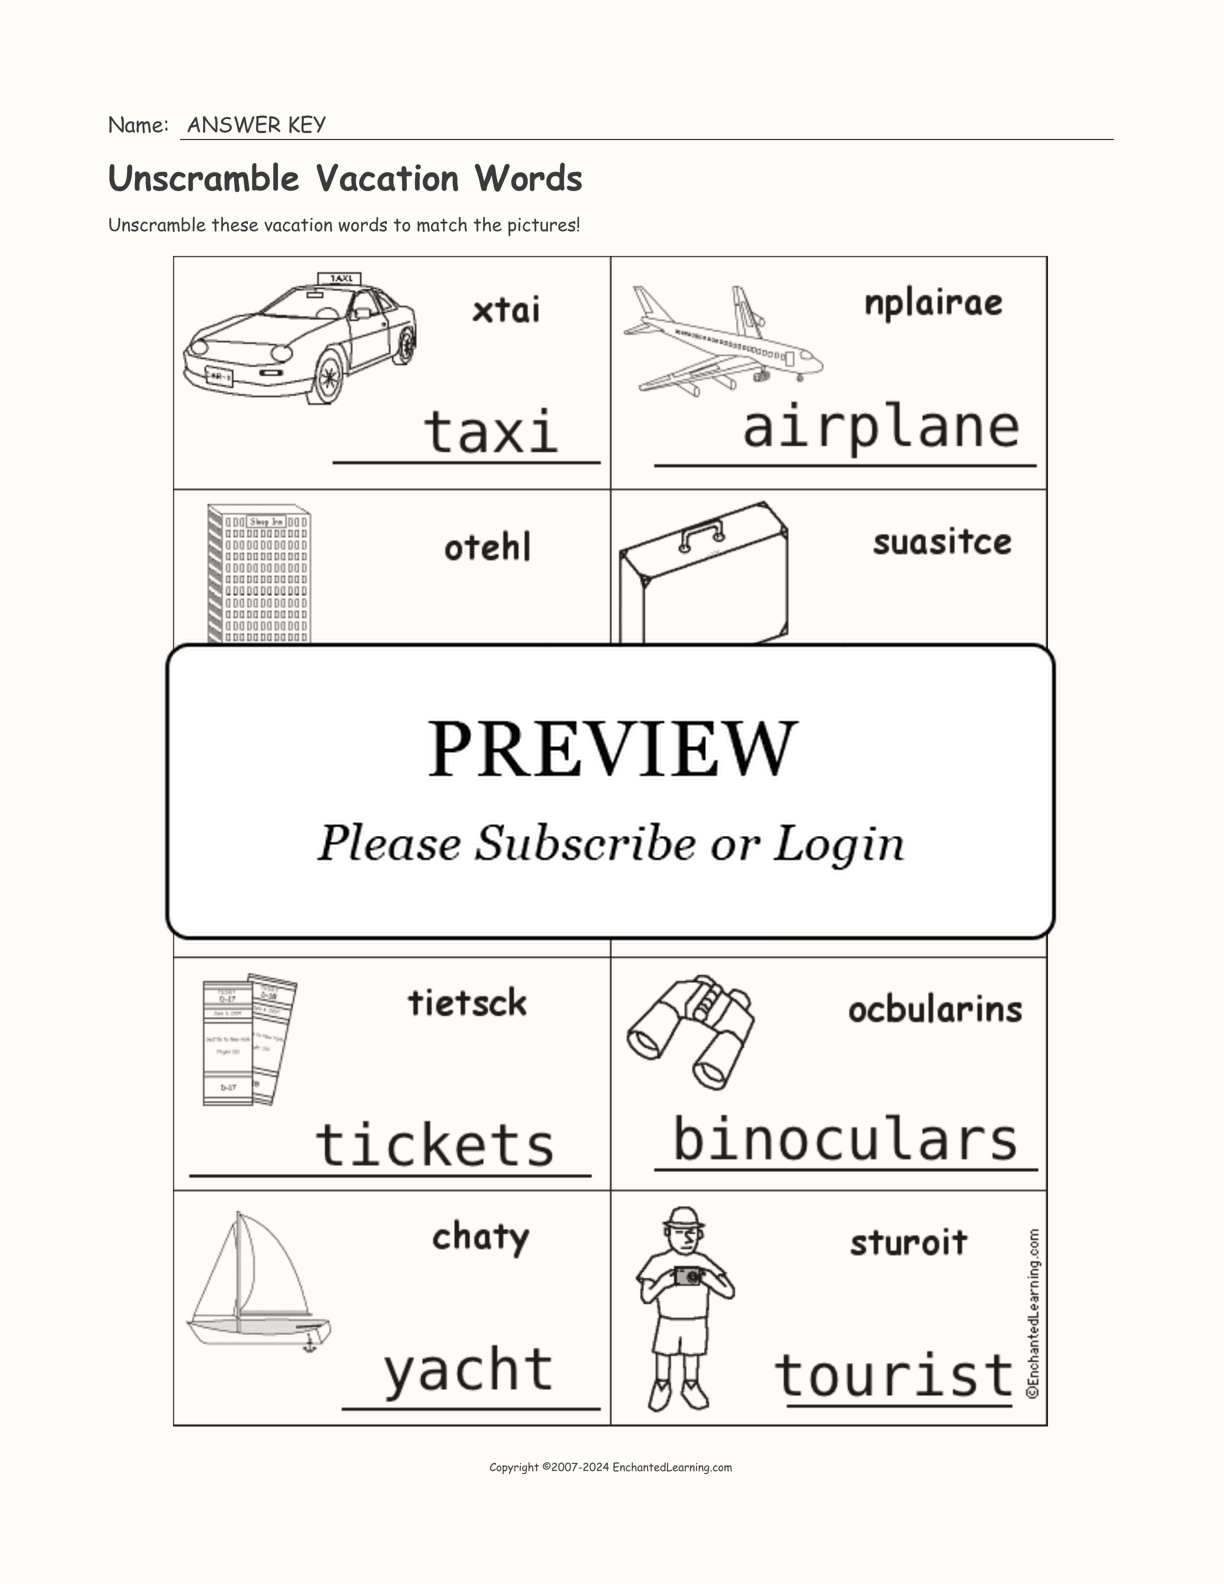 Unscramble Vacation Words interactive worksheet page 2